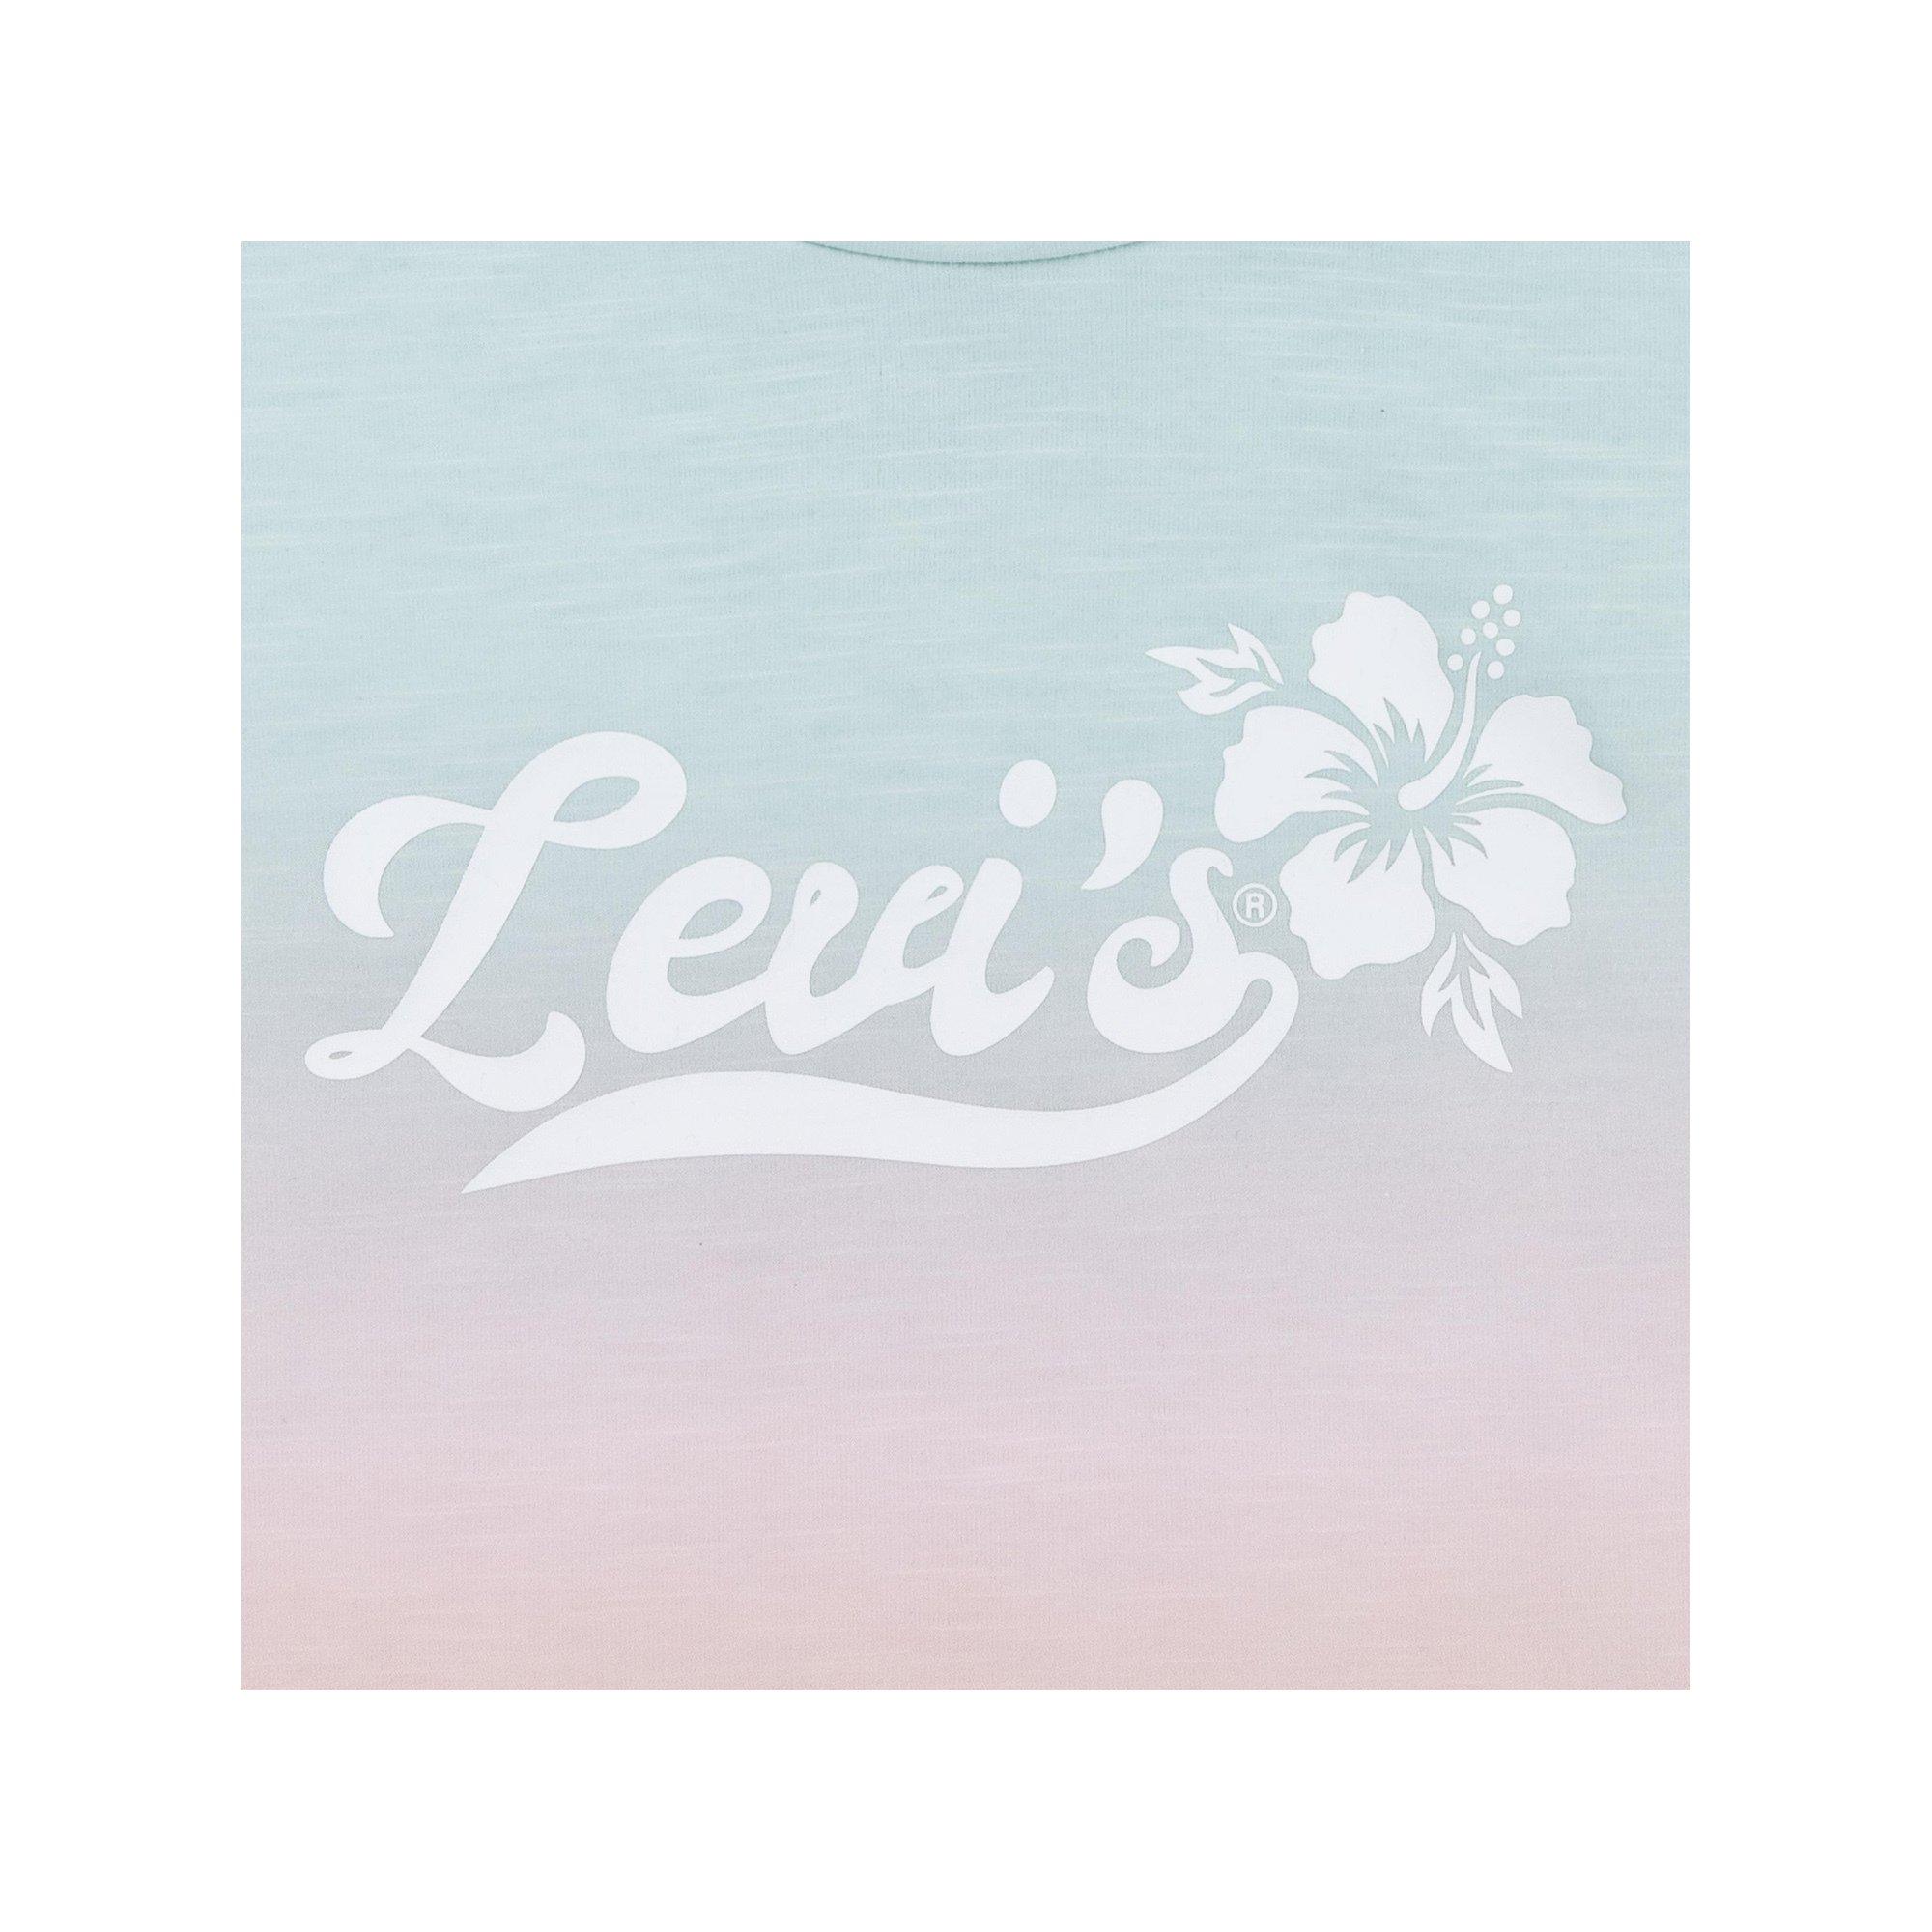 Levi's®  T-shirt, maniche corte 